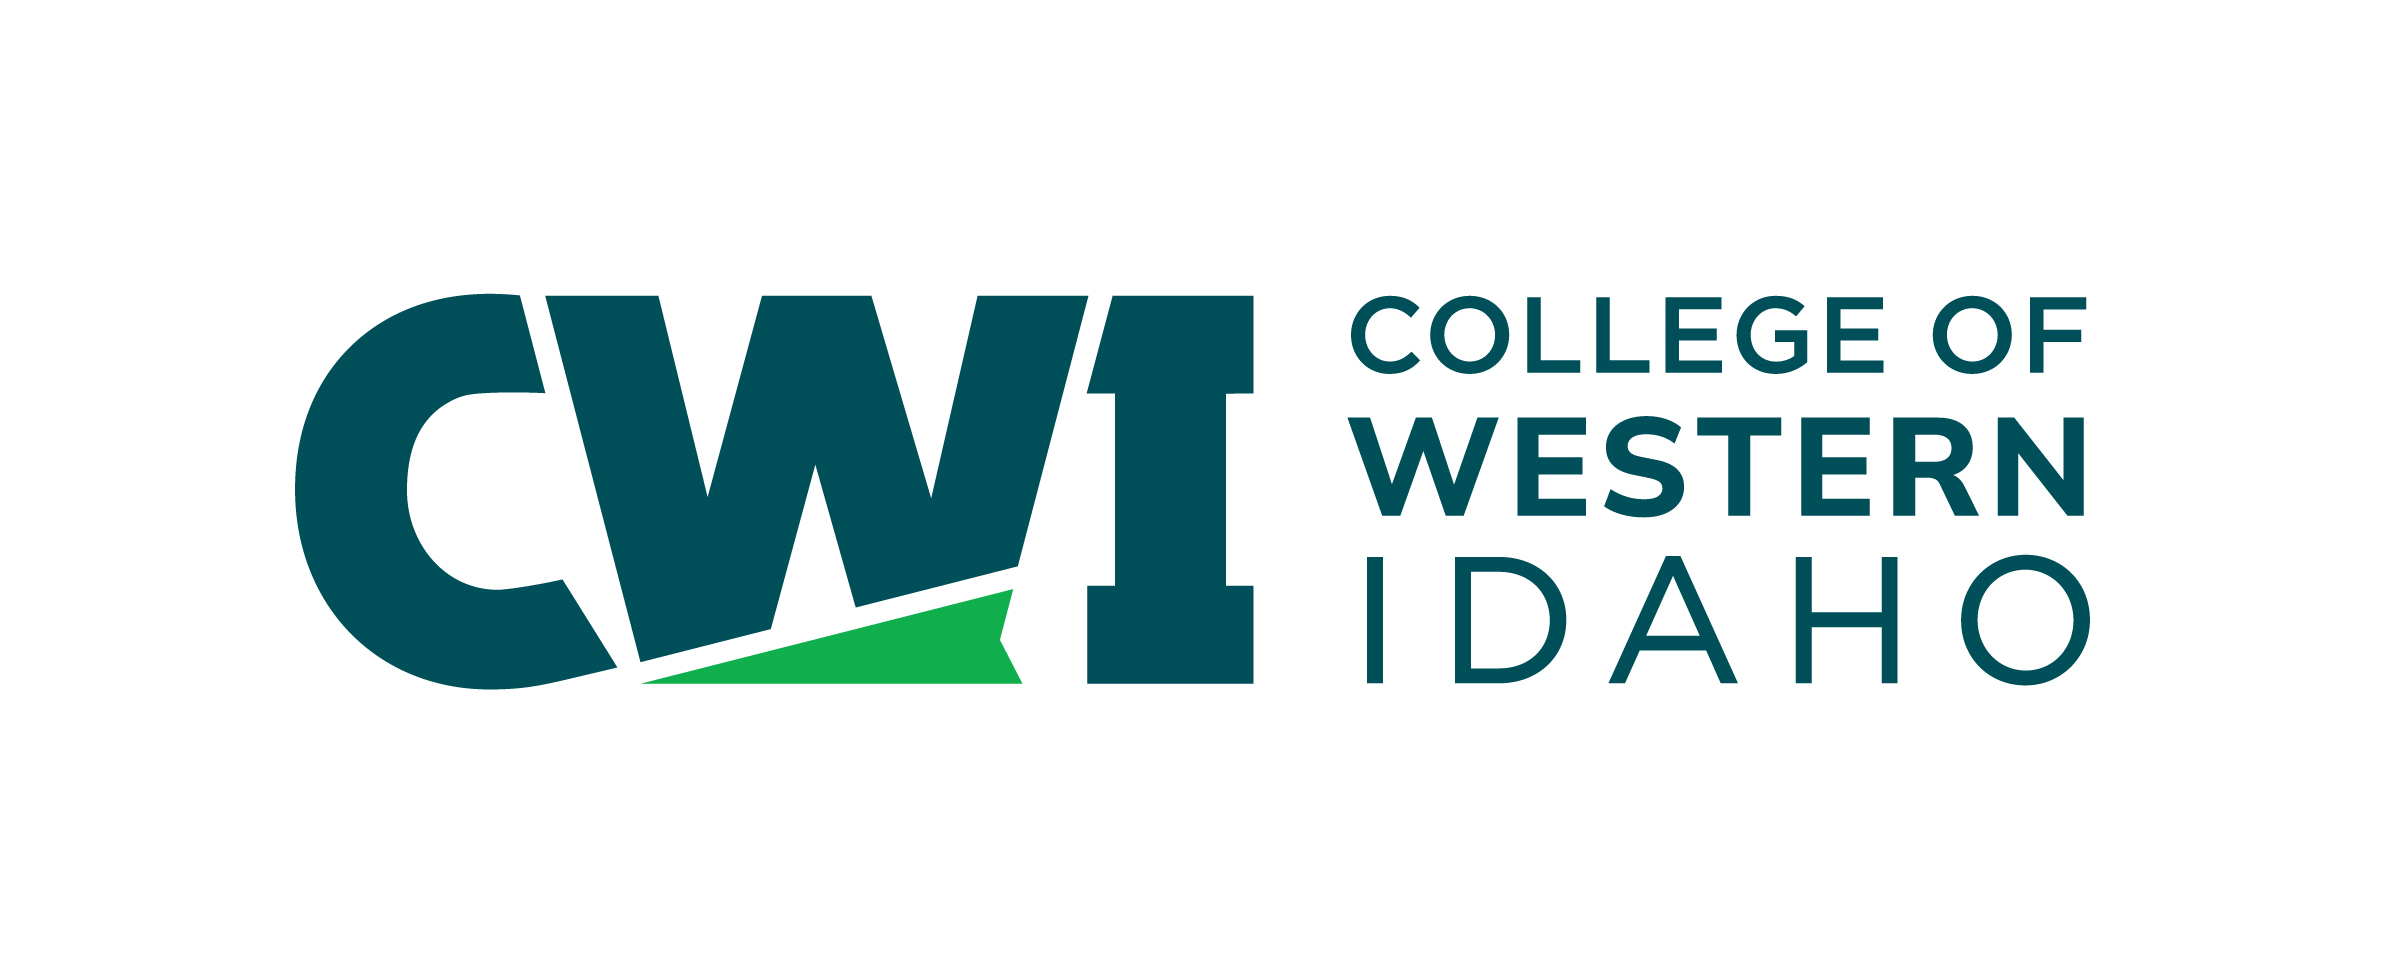 CWI College of Western Idaho